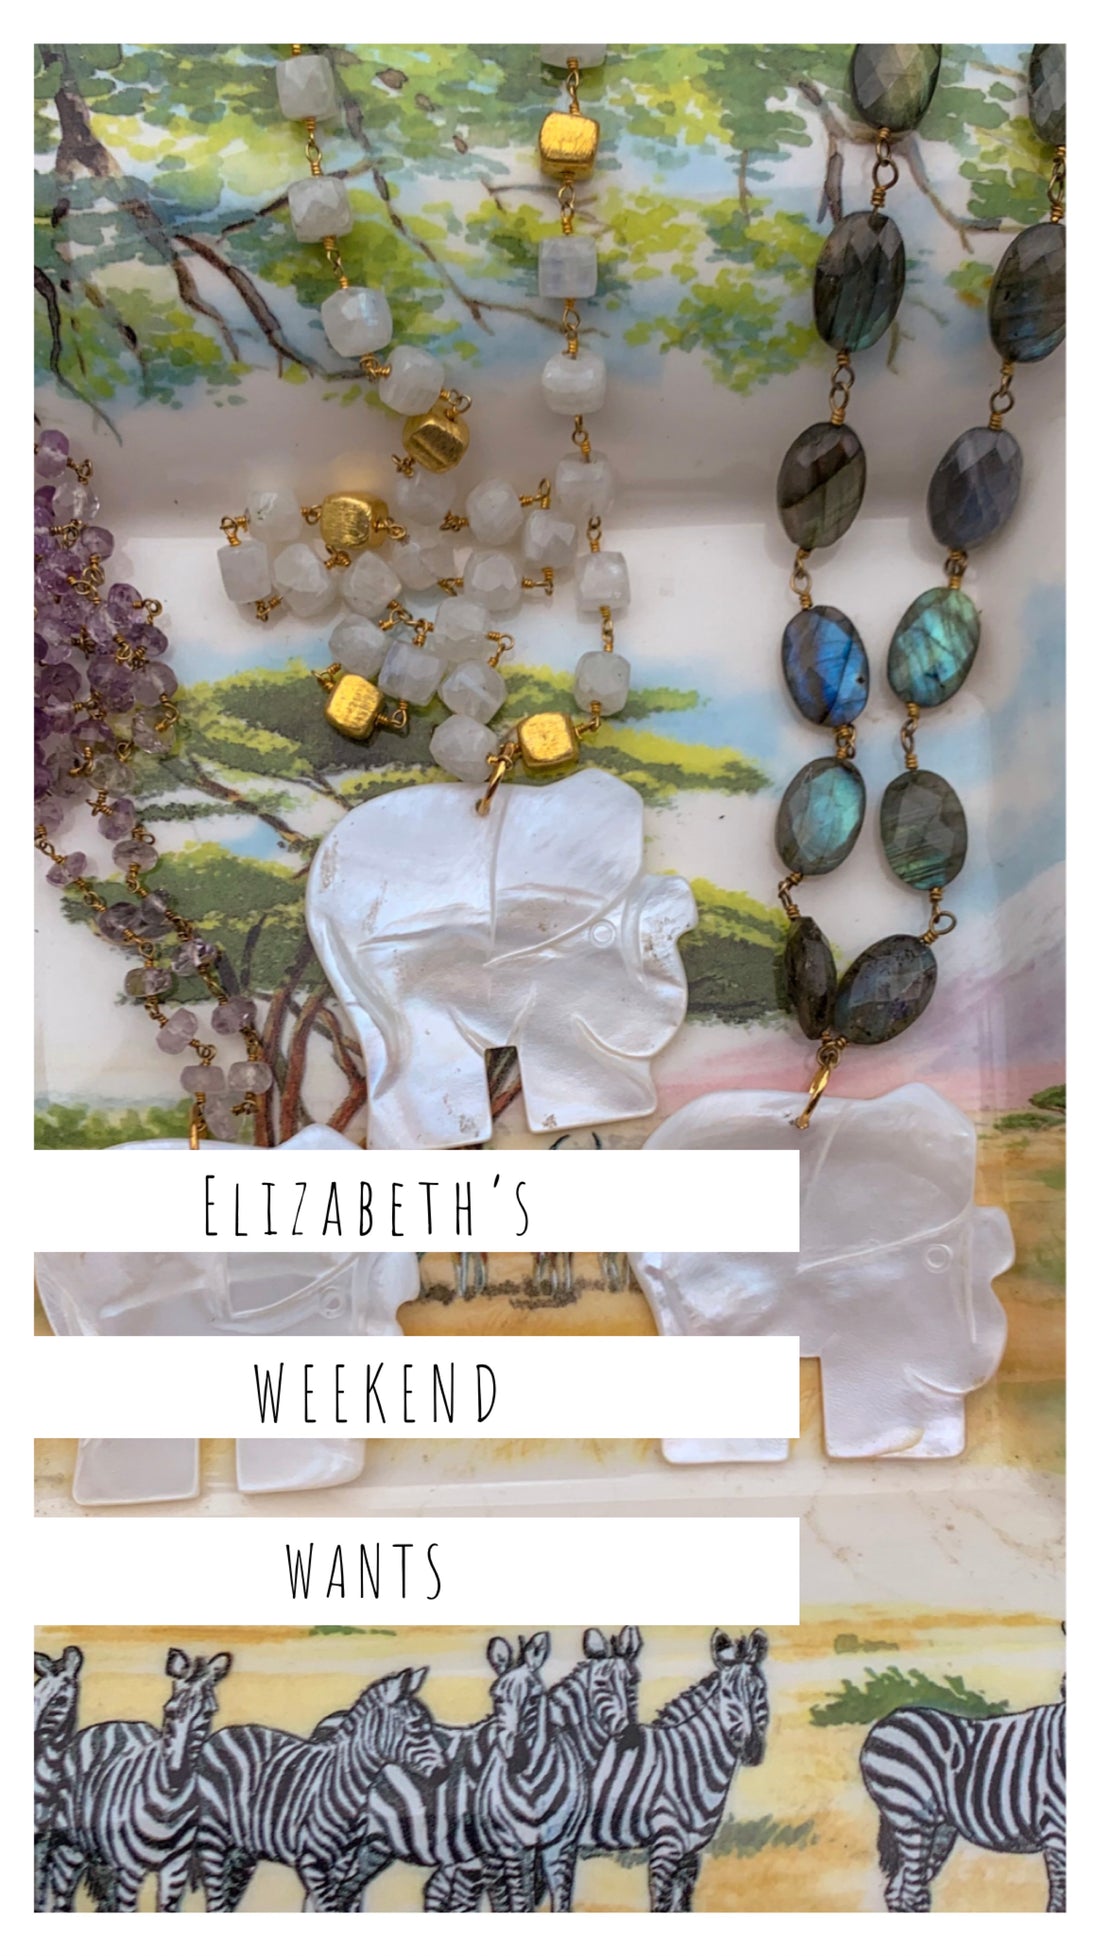 Elizabeth's Weekend Wants: Post Holiday Needs